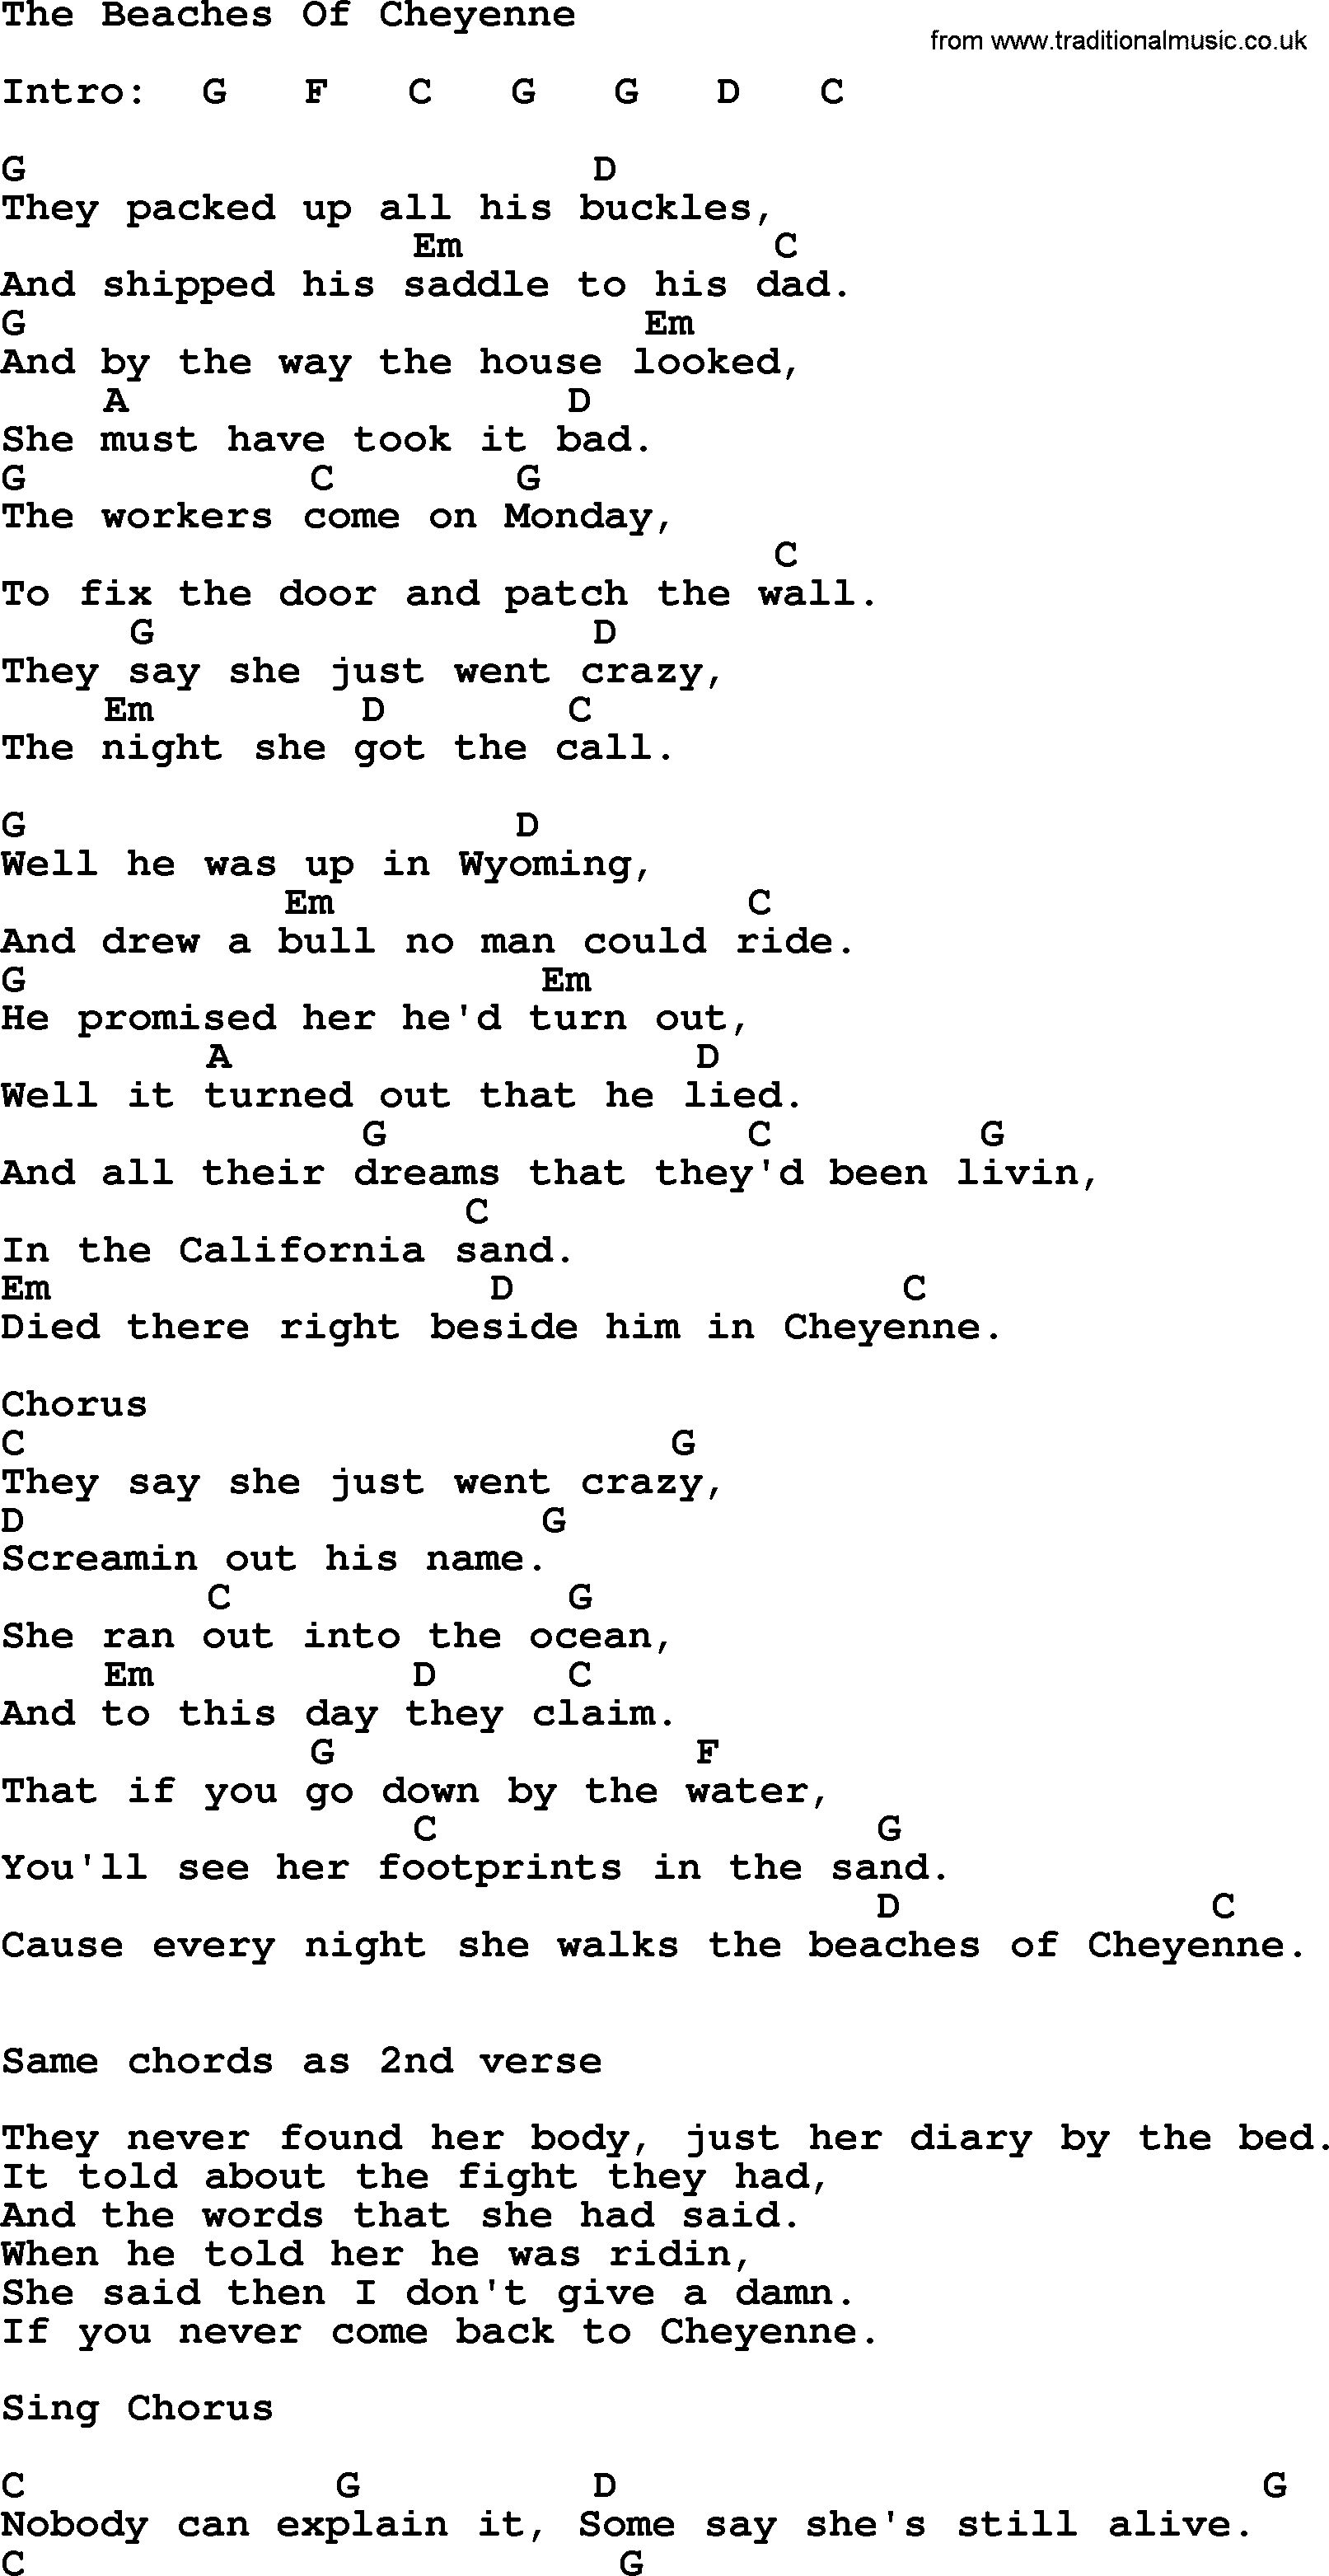 Garth Brooks song: The Beaches Of Cheyenne, lyrics and chords